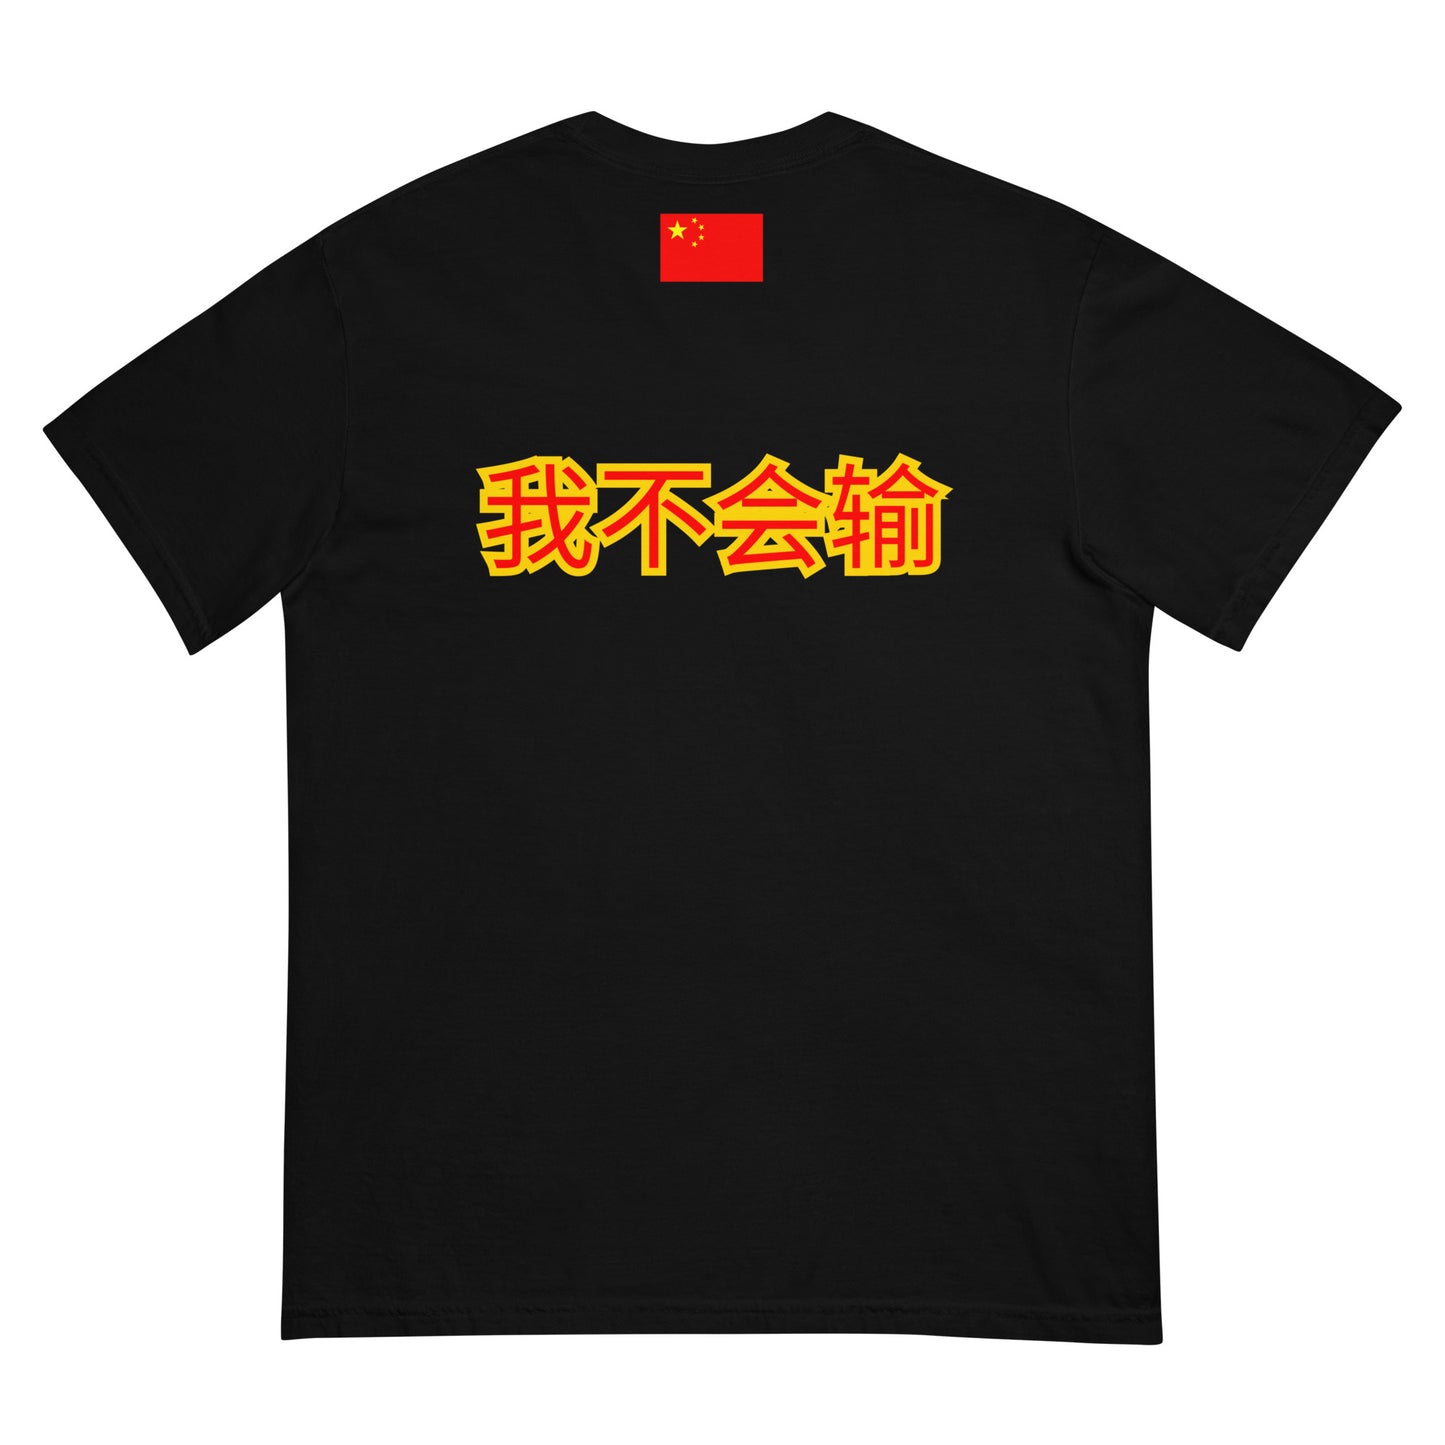 BigSmoke Soprano Clothing: BigSmoke Soprano Worldwide Collection: I Can Not Lose Tee (China Edition)